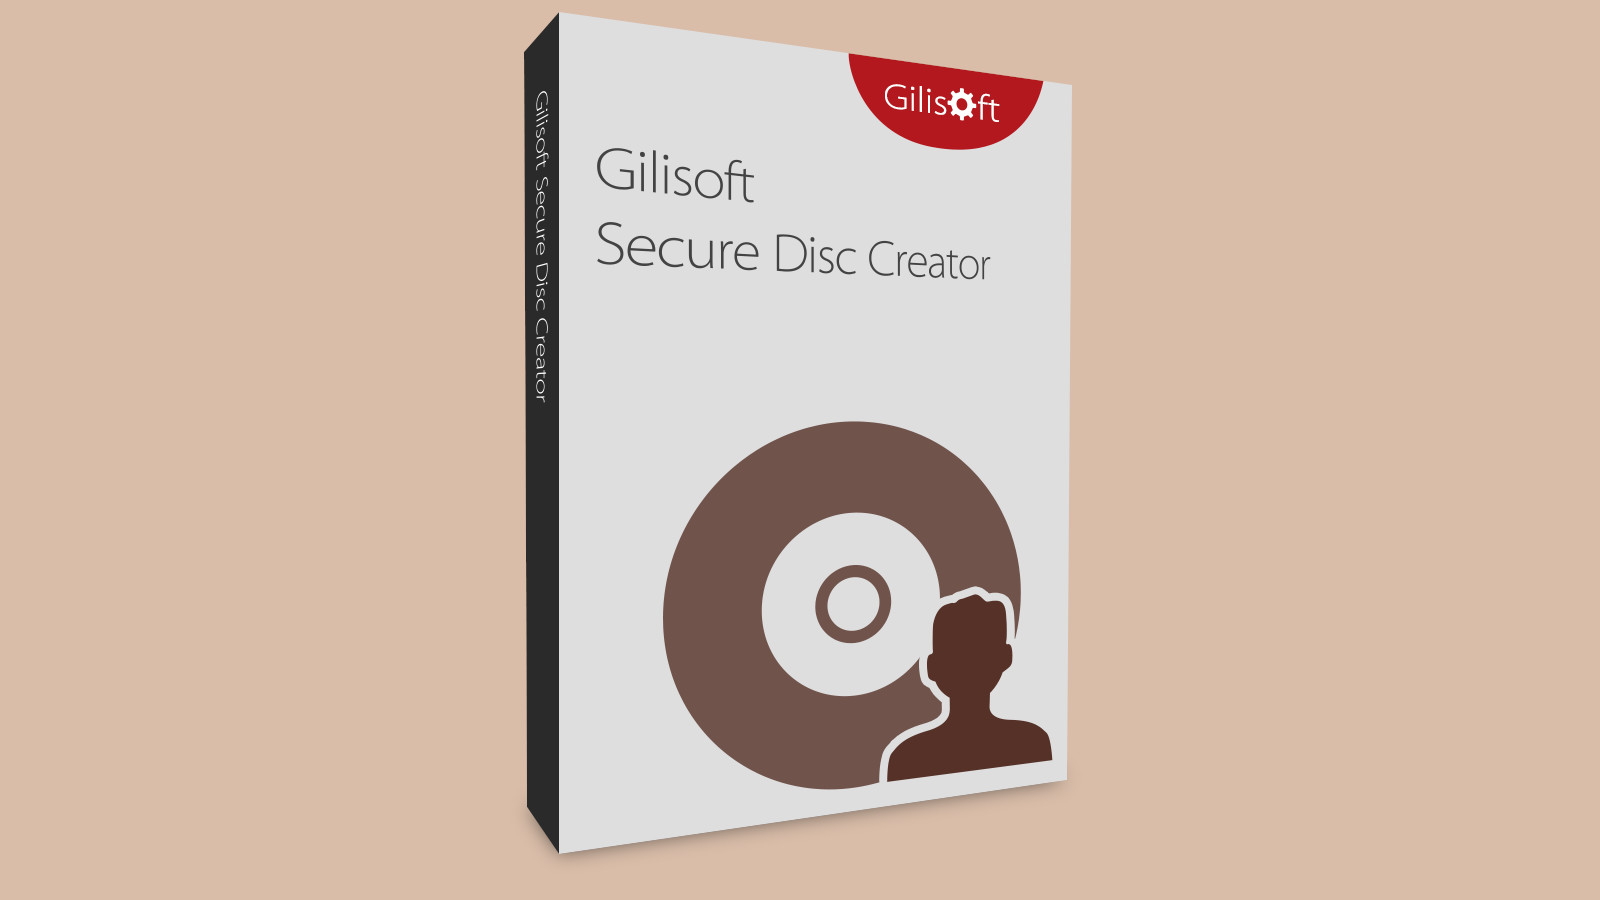 Gilisoft Secure Disc Creator CD Key 6.84$